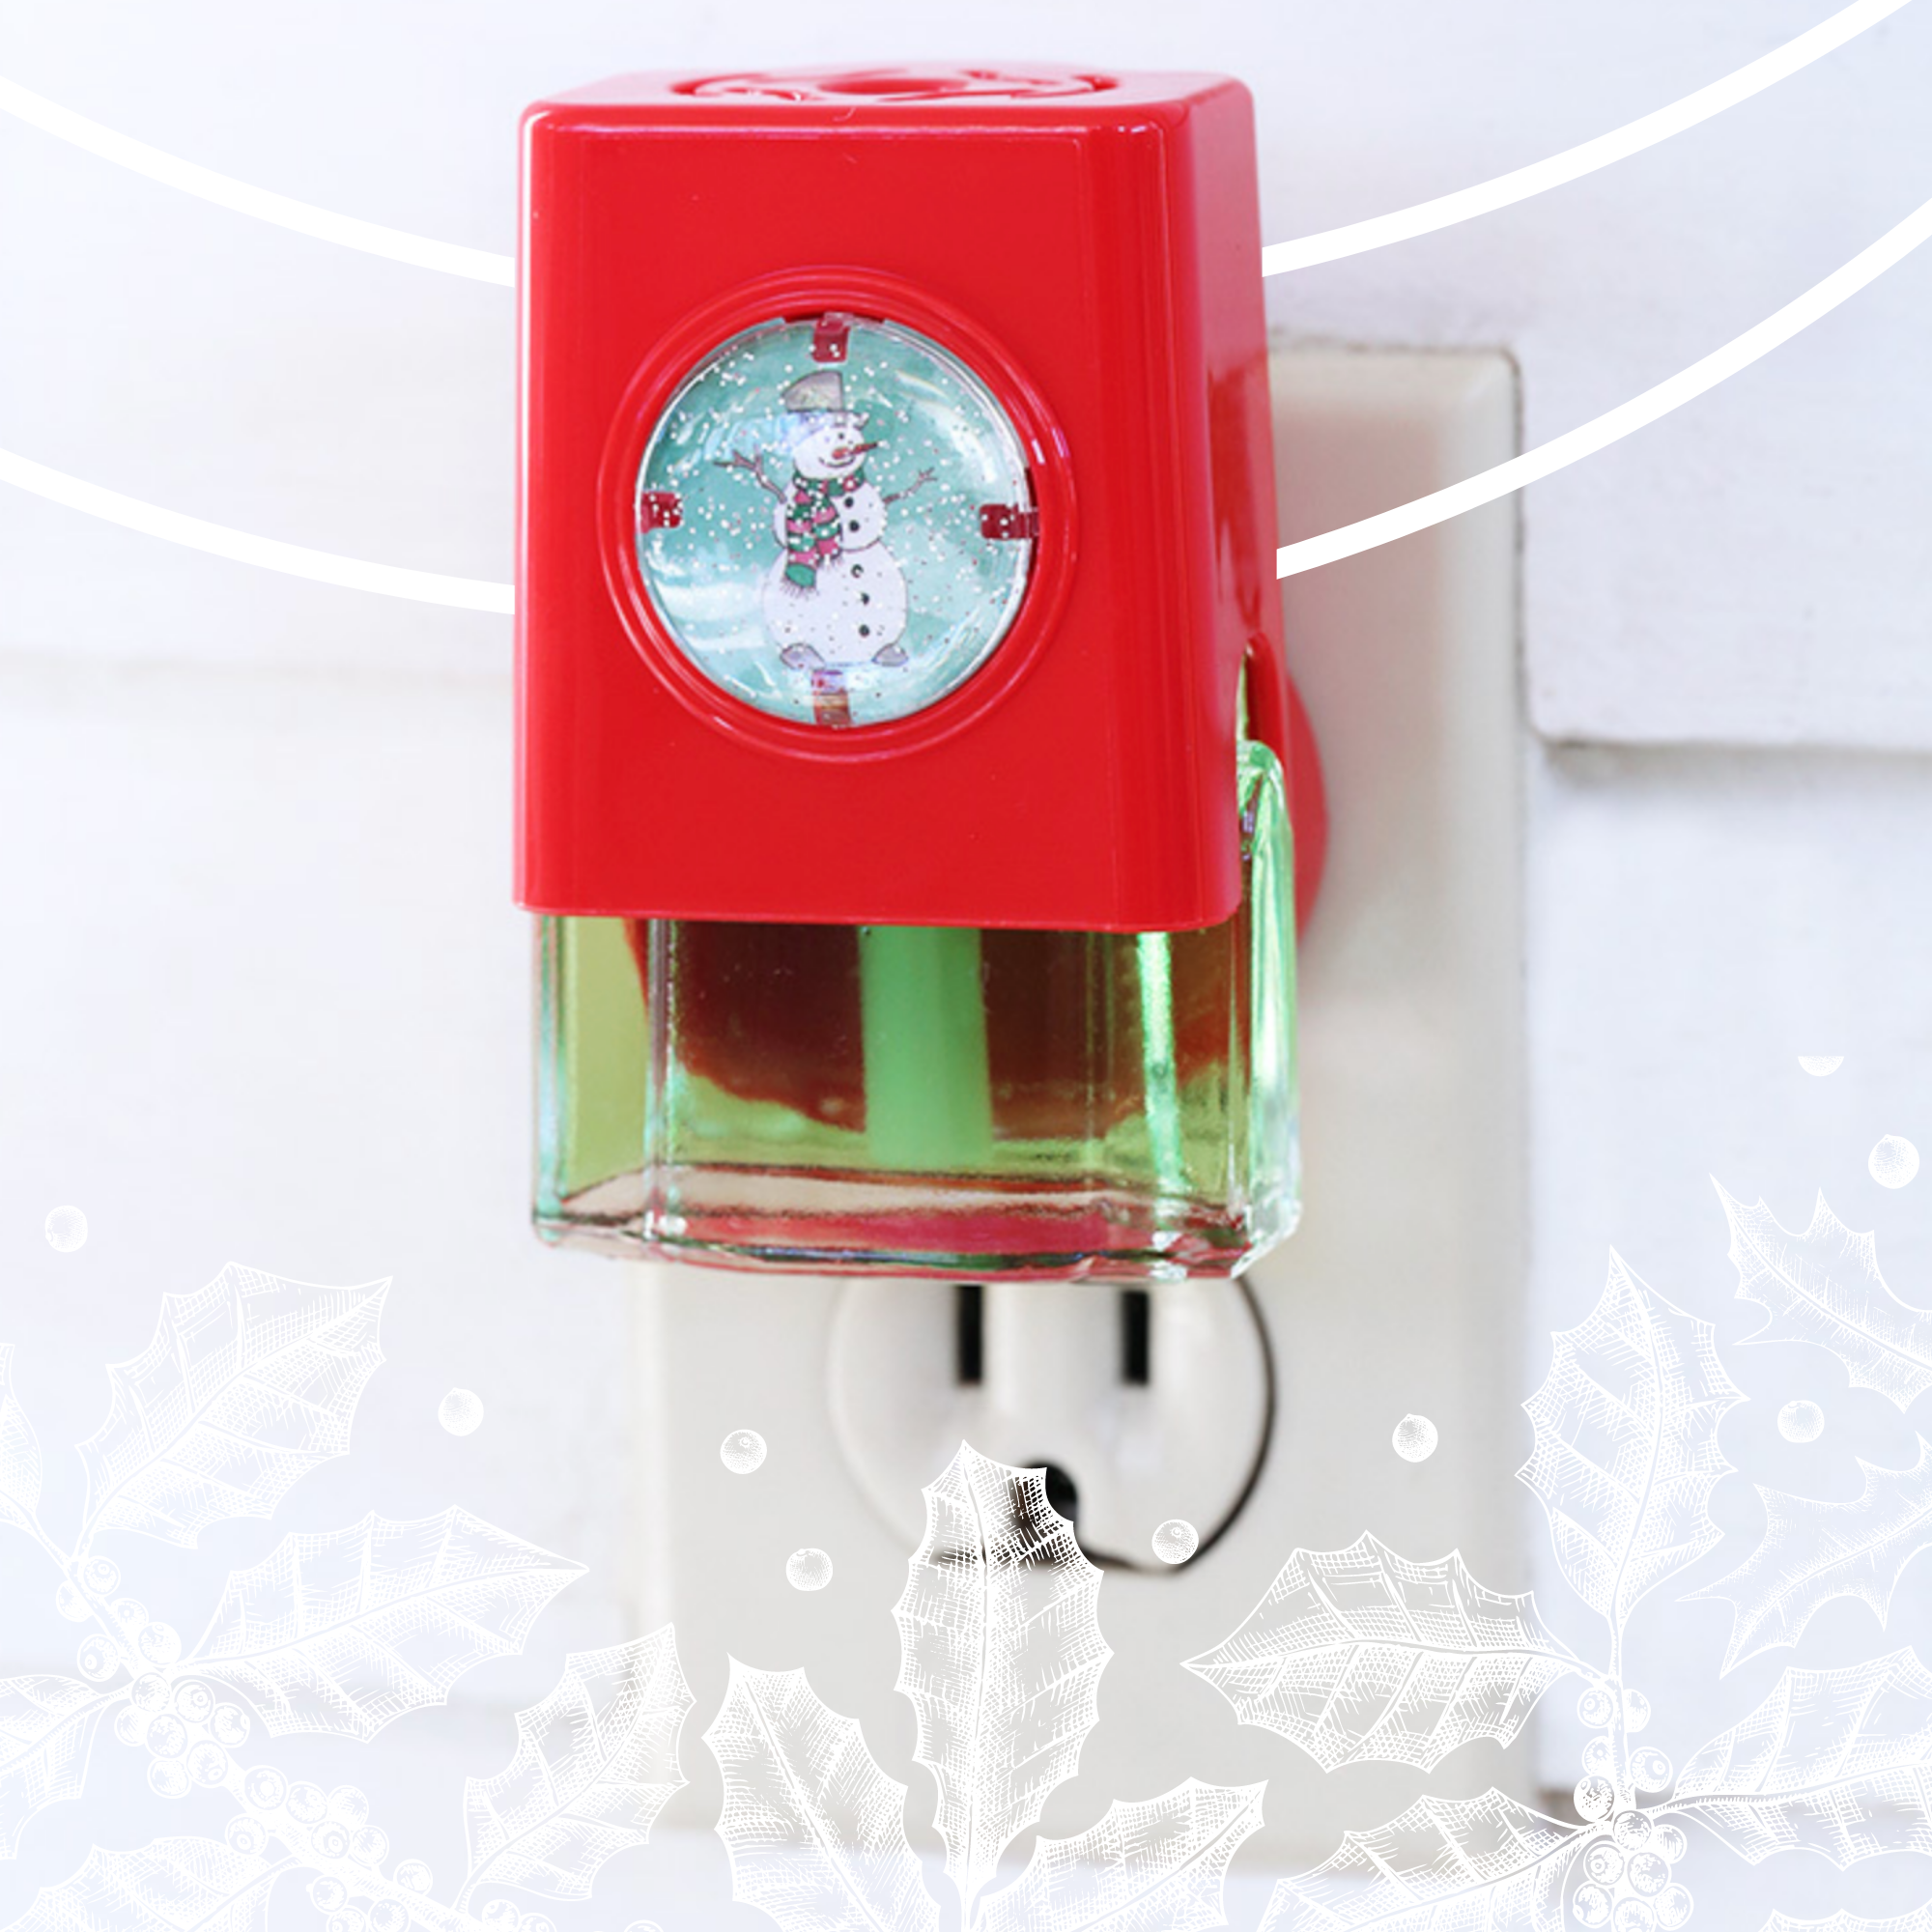 Glitter Domes™ Plugables® Electric Scented Oil Diffuser - Snowman  Home Fragrance Accessories